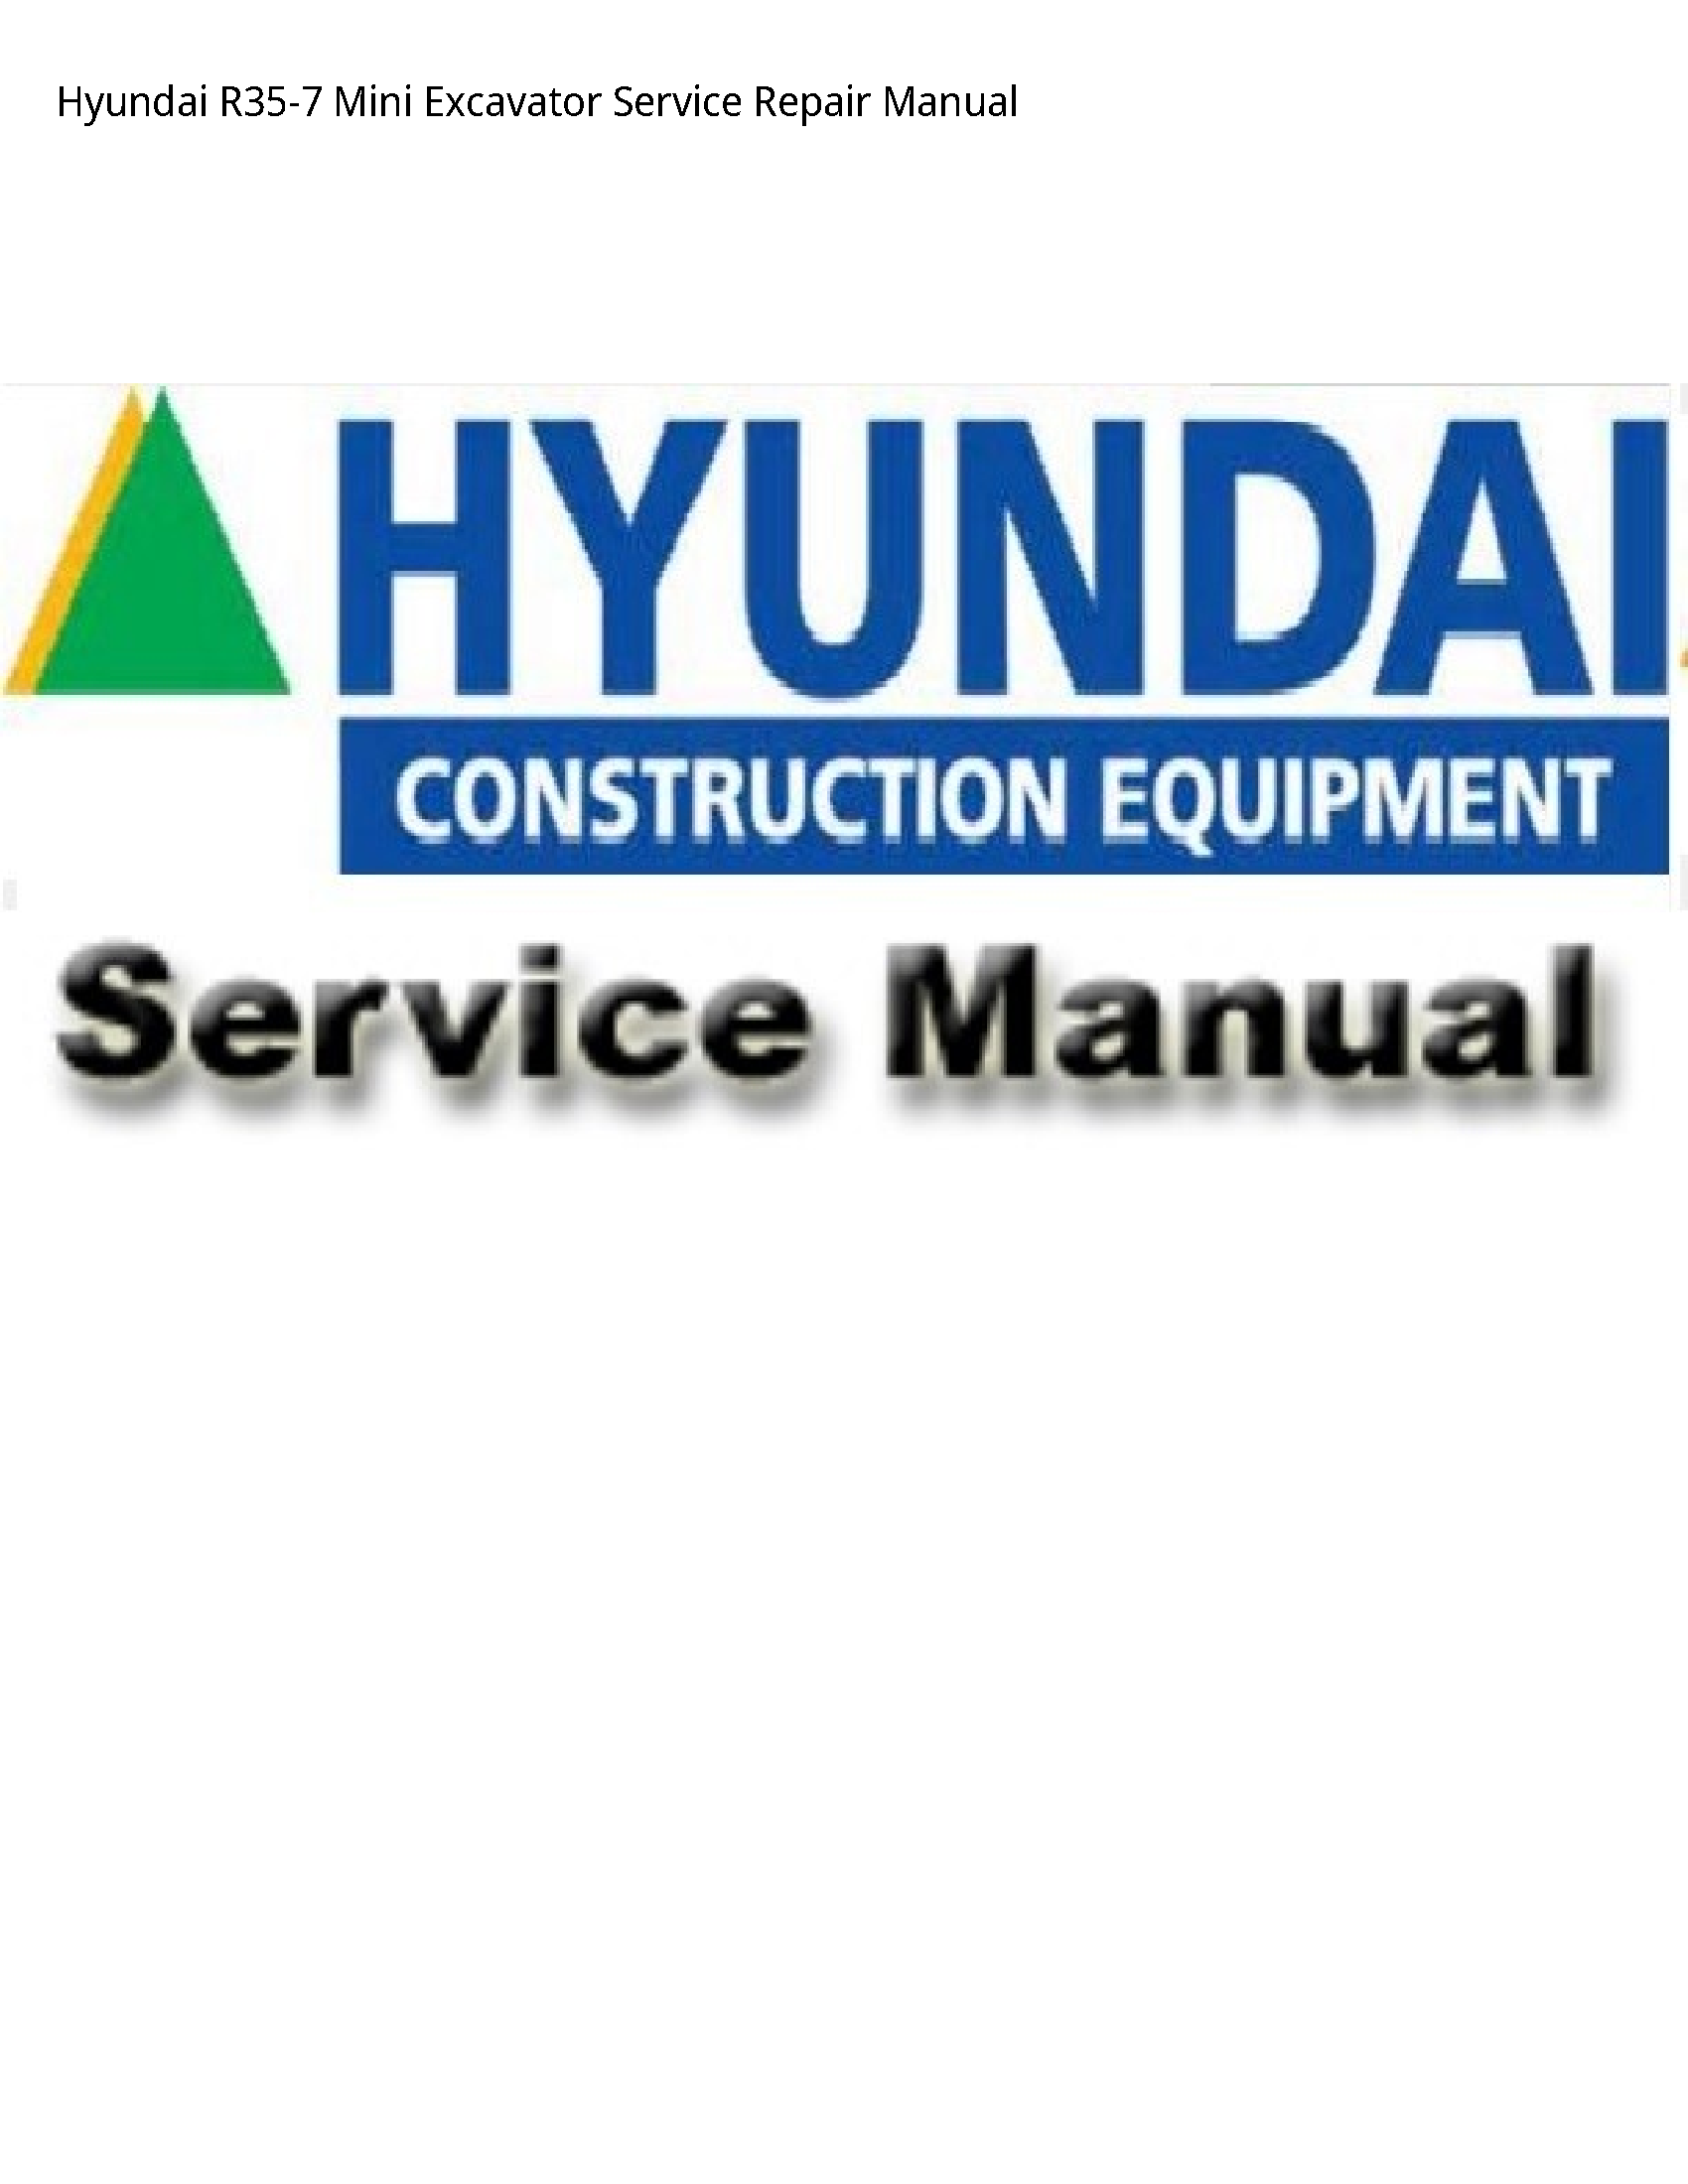 Hyundai R35-7 Mini Excavator manual